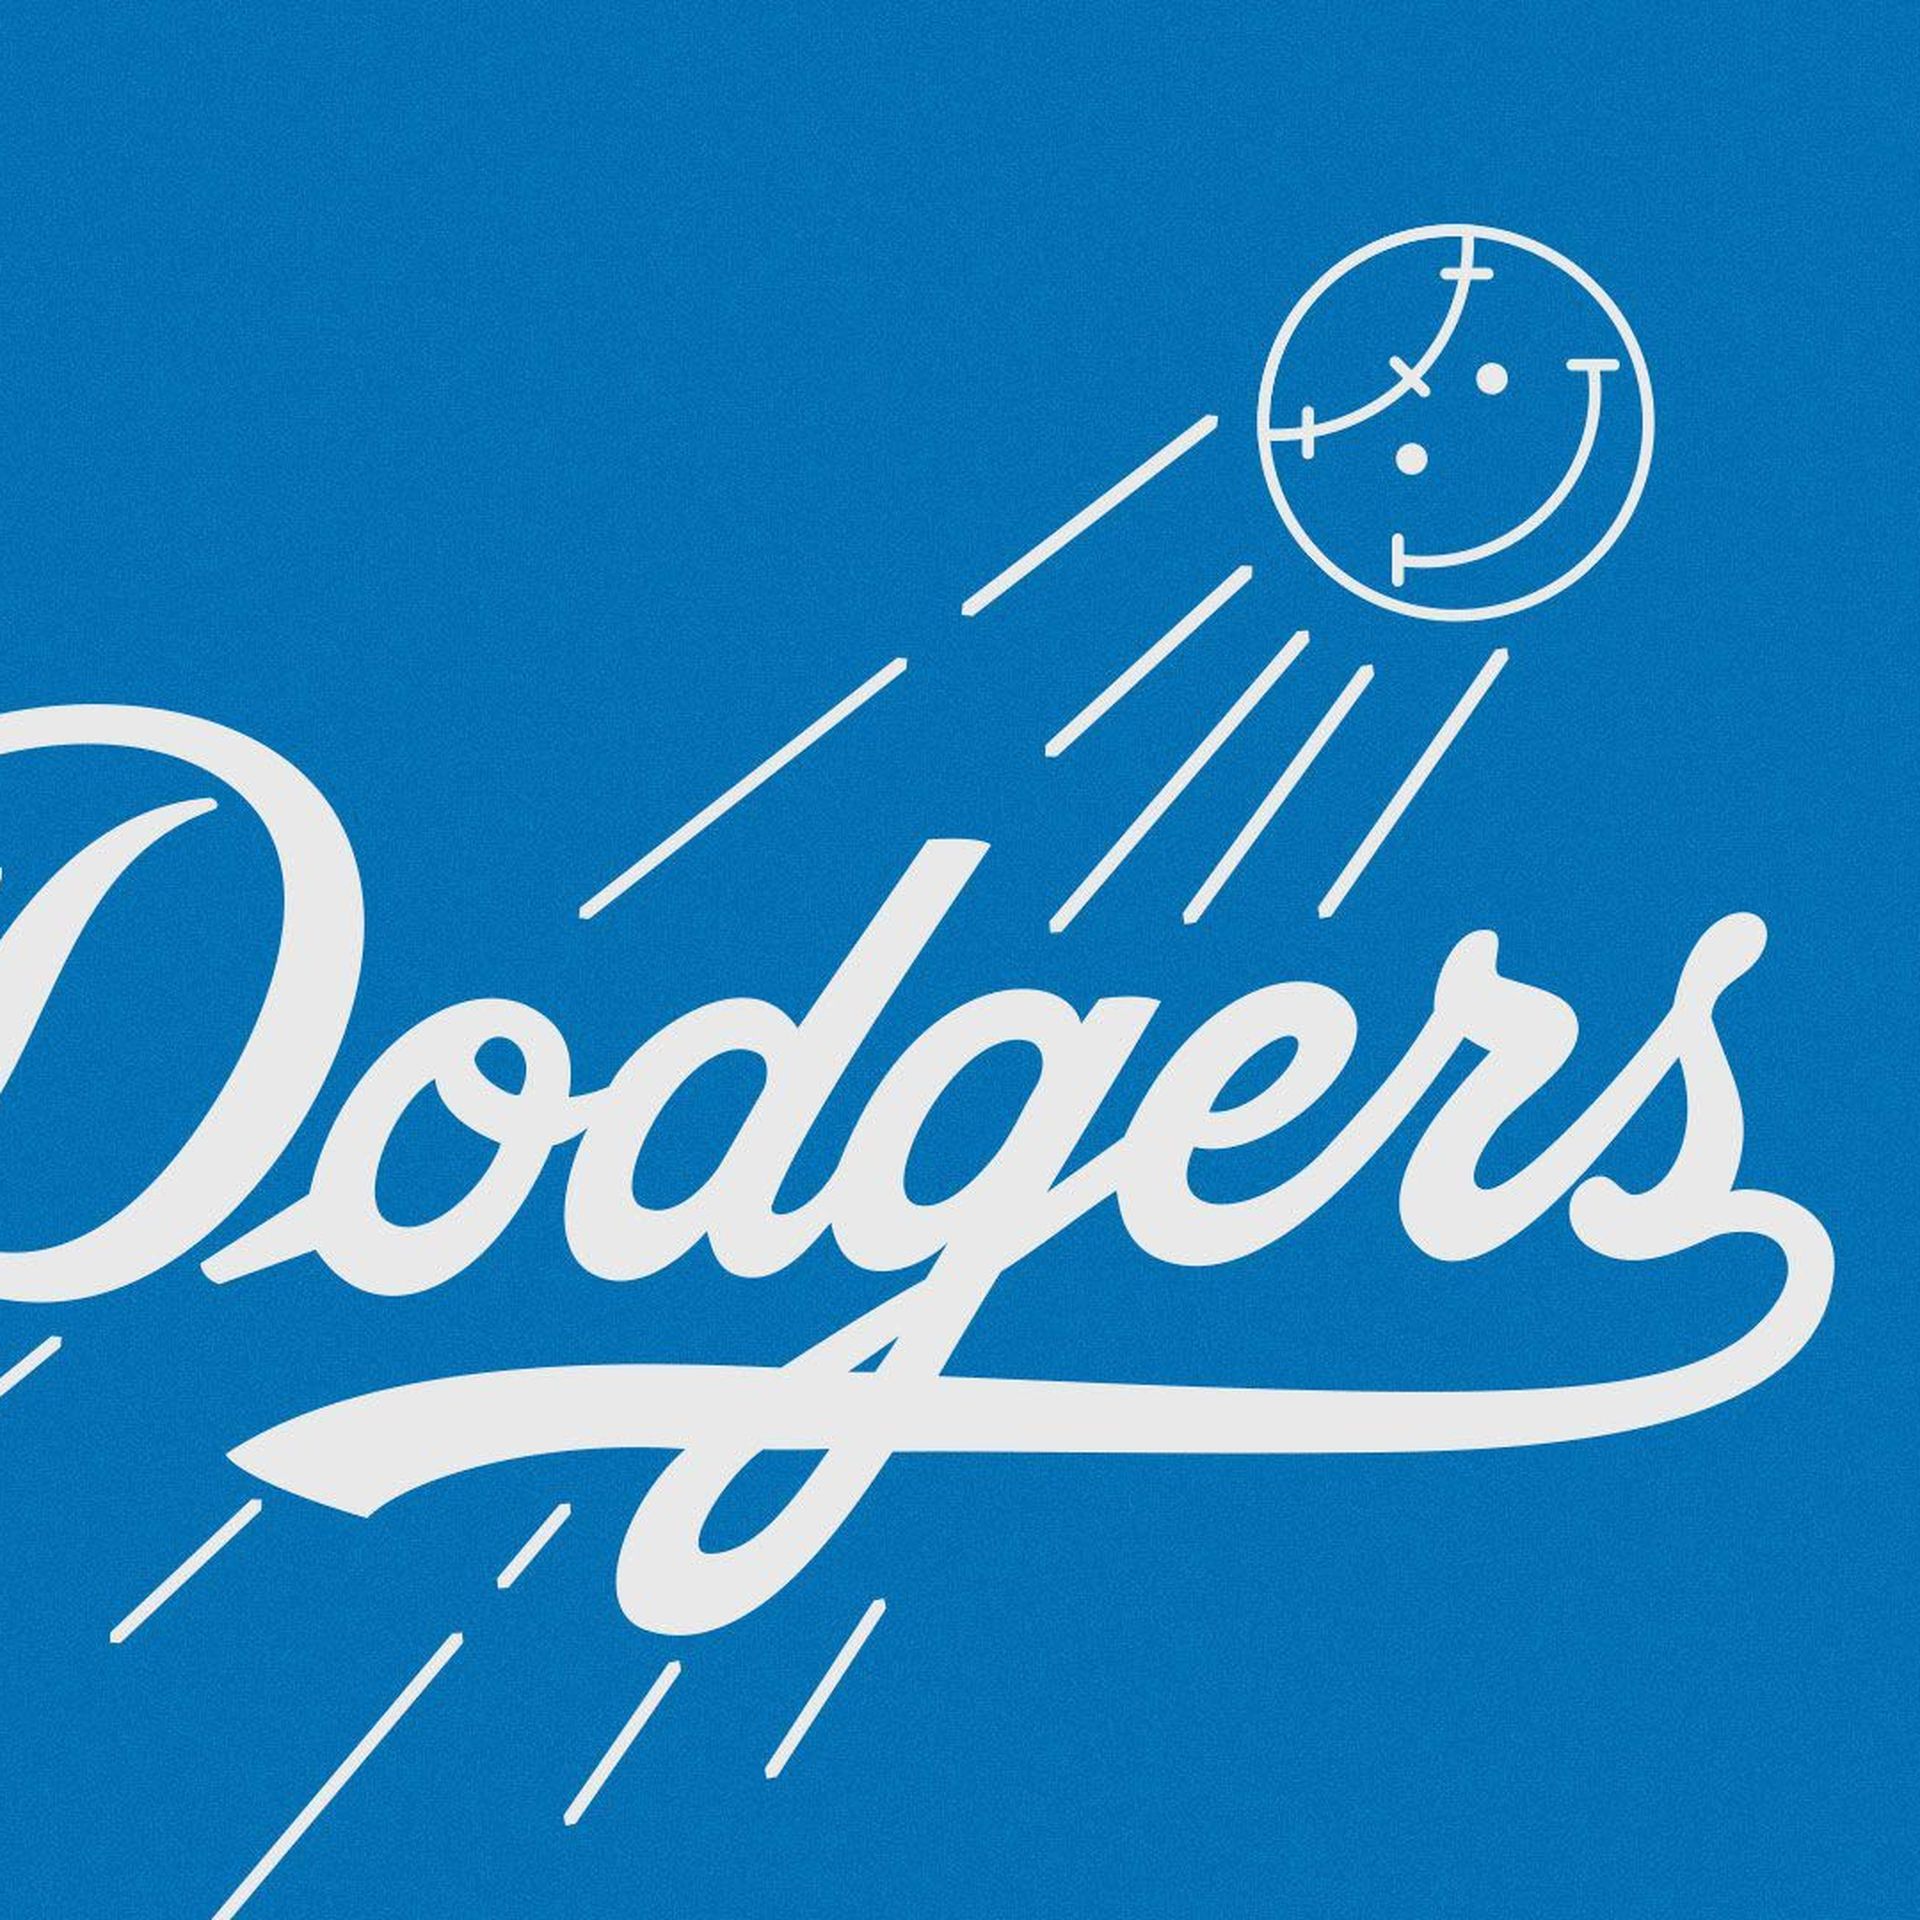 Illustration of the Dodgers logo